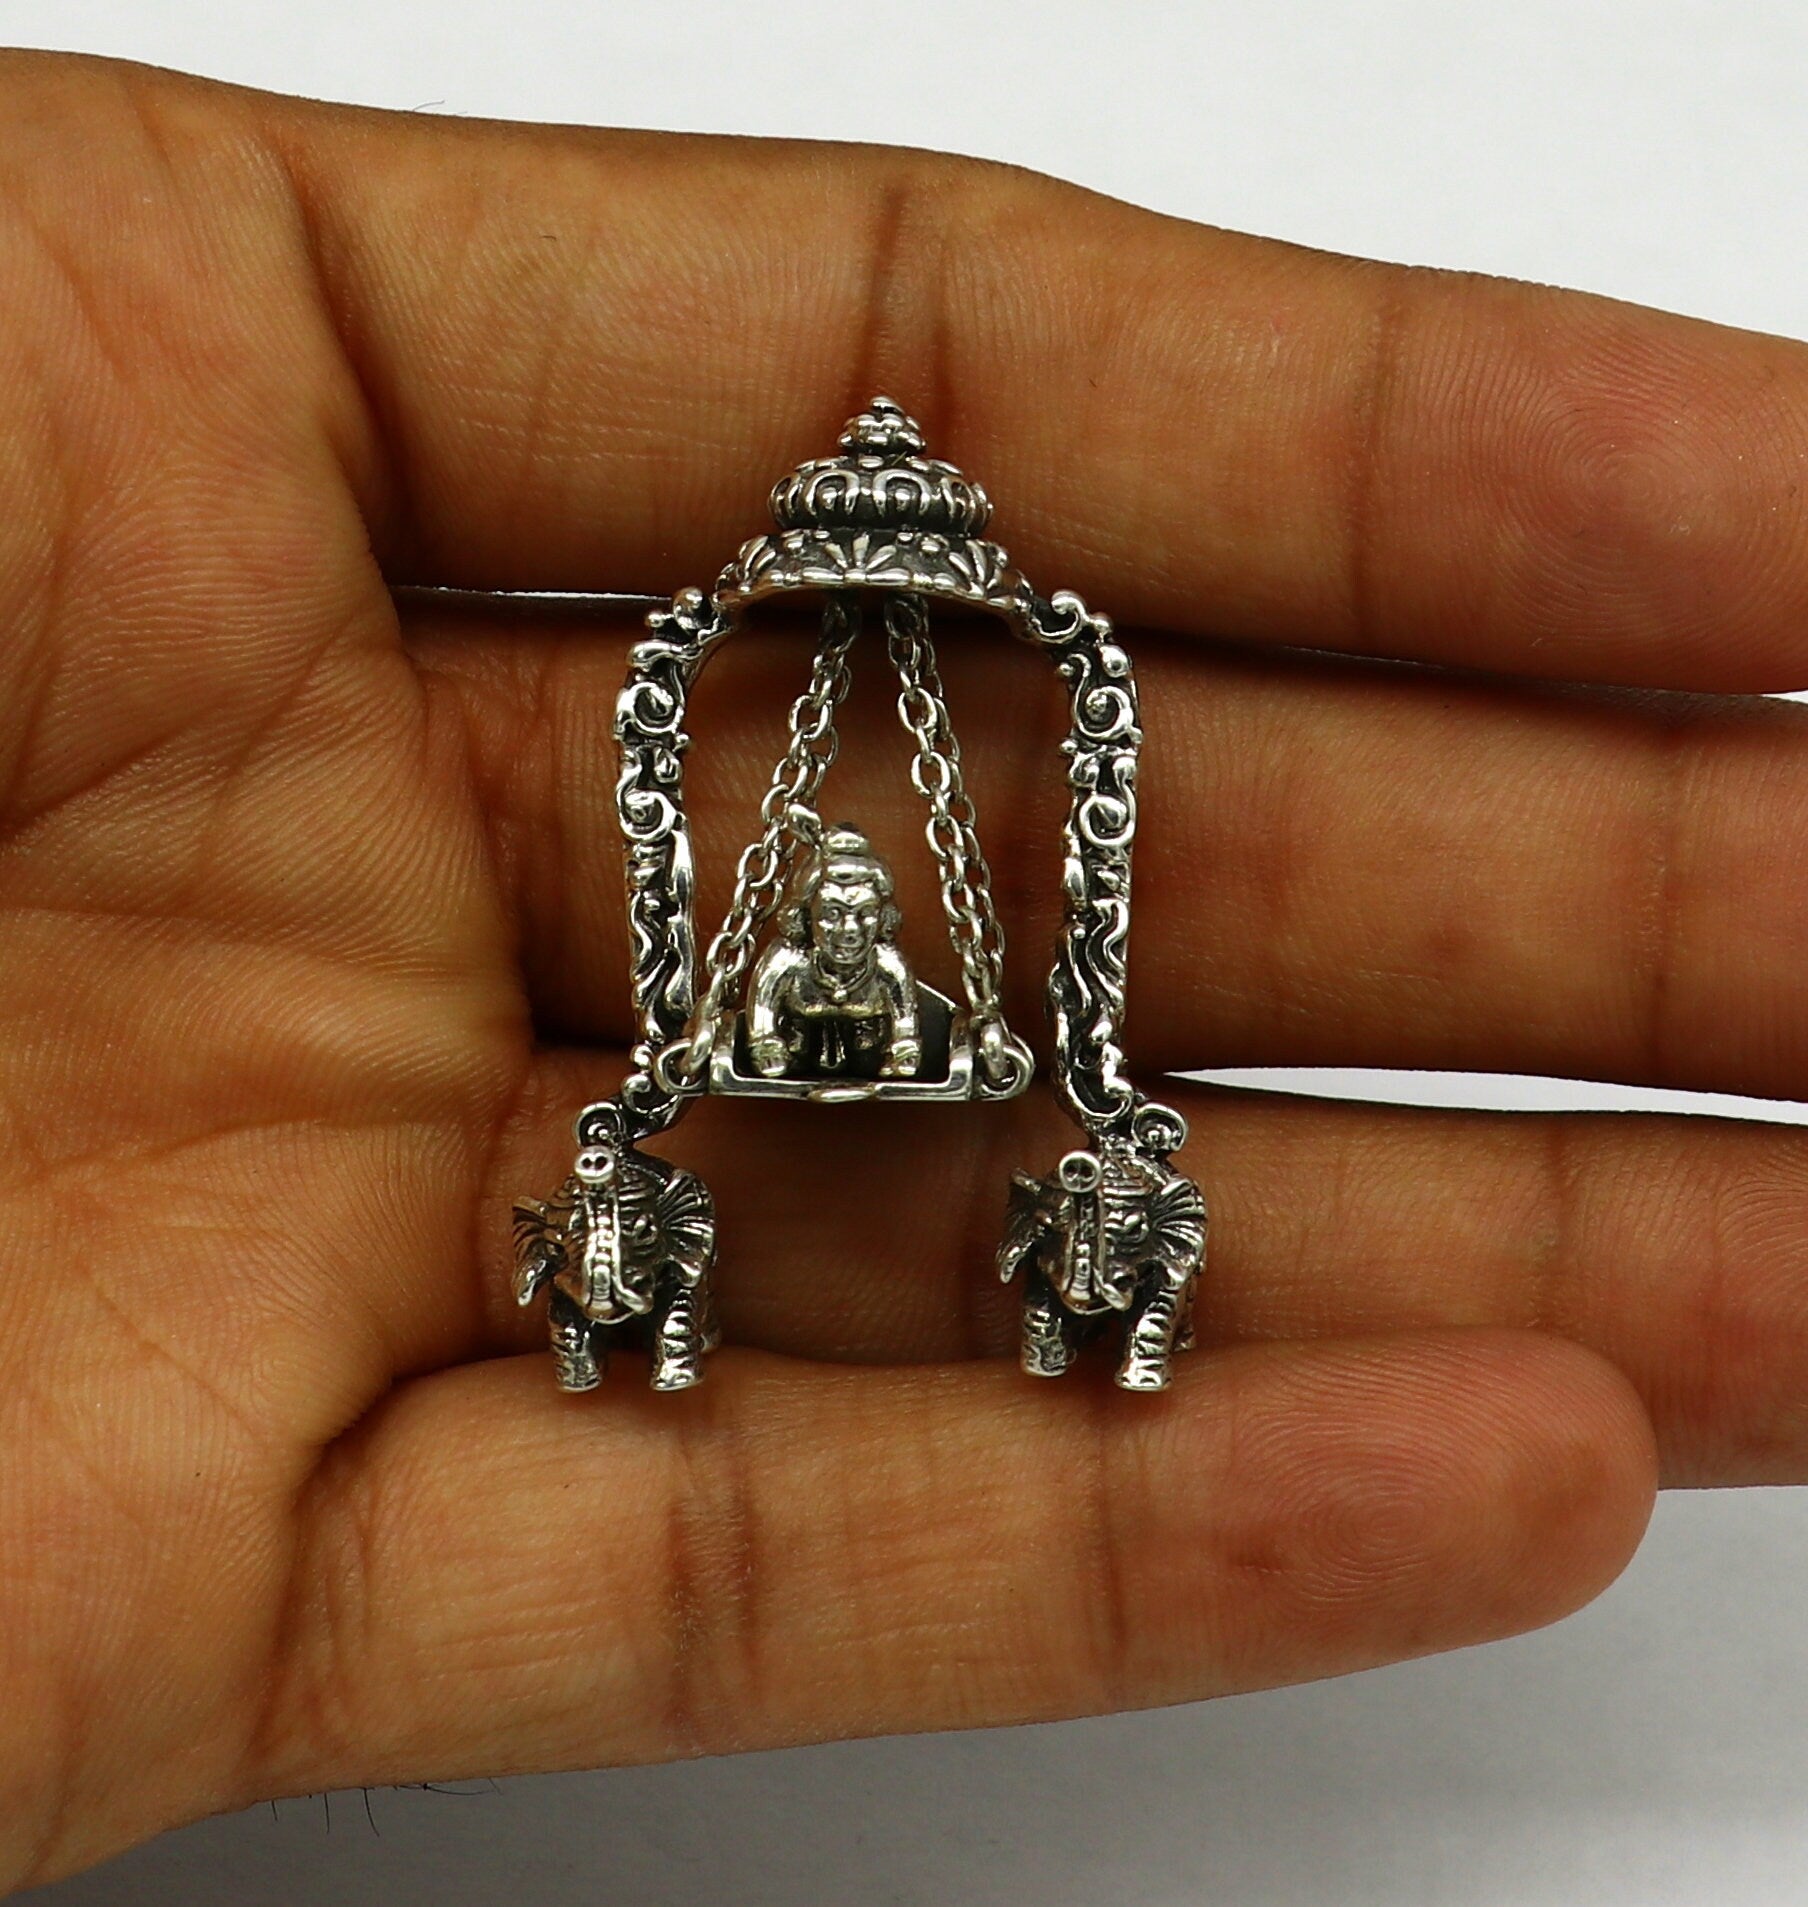 925 Sterling silver handmade custom design Idols Lord Krishna with swing, Bal Gopala Statue figurine, puja articles decorative gift art39 - TRIBAL ORNAMENTS